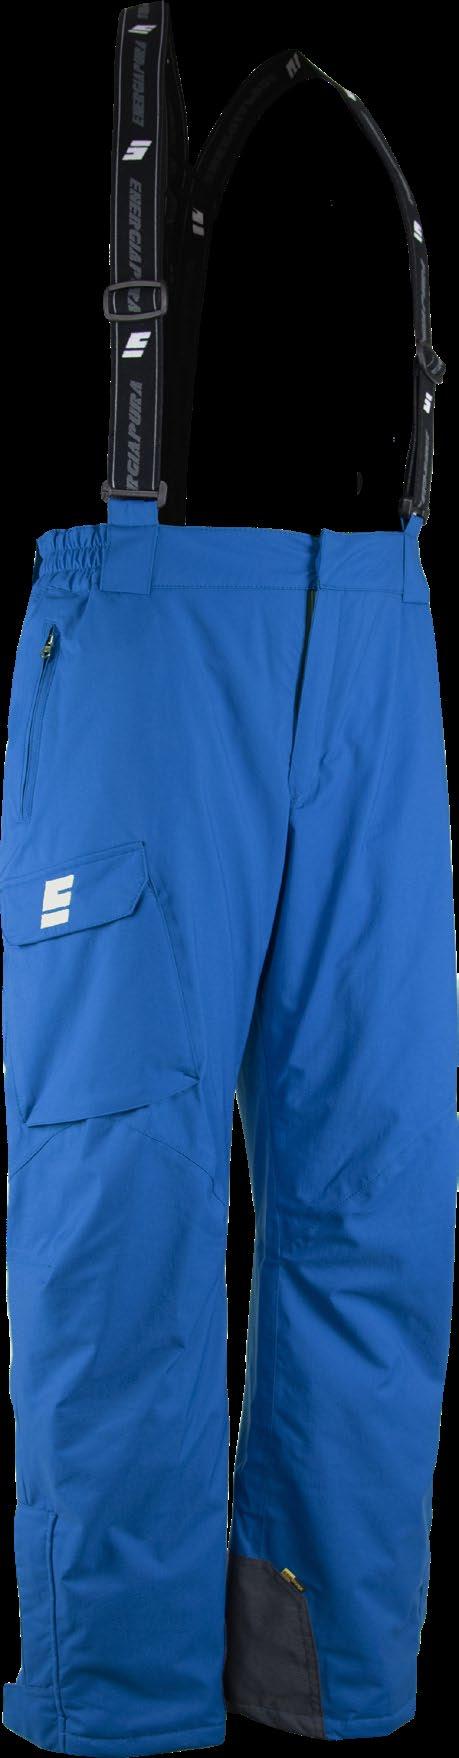 elastico antiscivolo -Zip laterali corte nel fondo gamba -TWaterproof, breathable, thermal and windproof pants -MicroValtherm 60